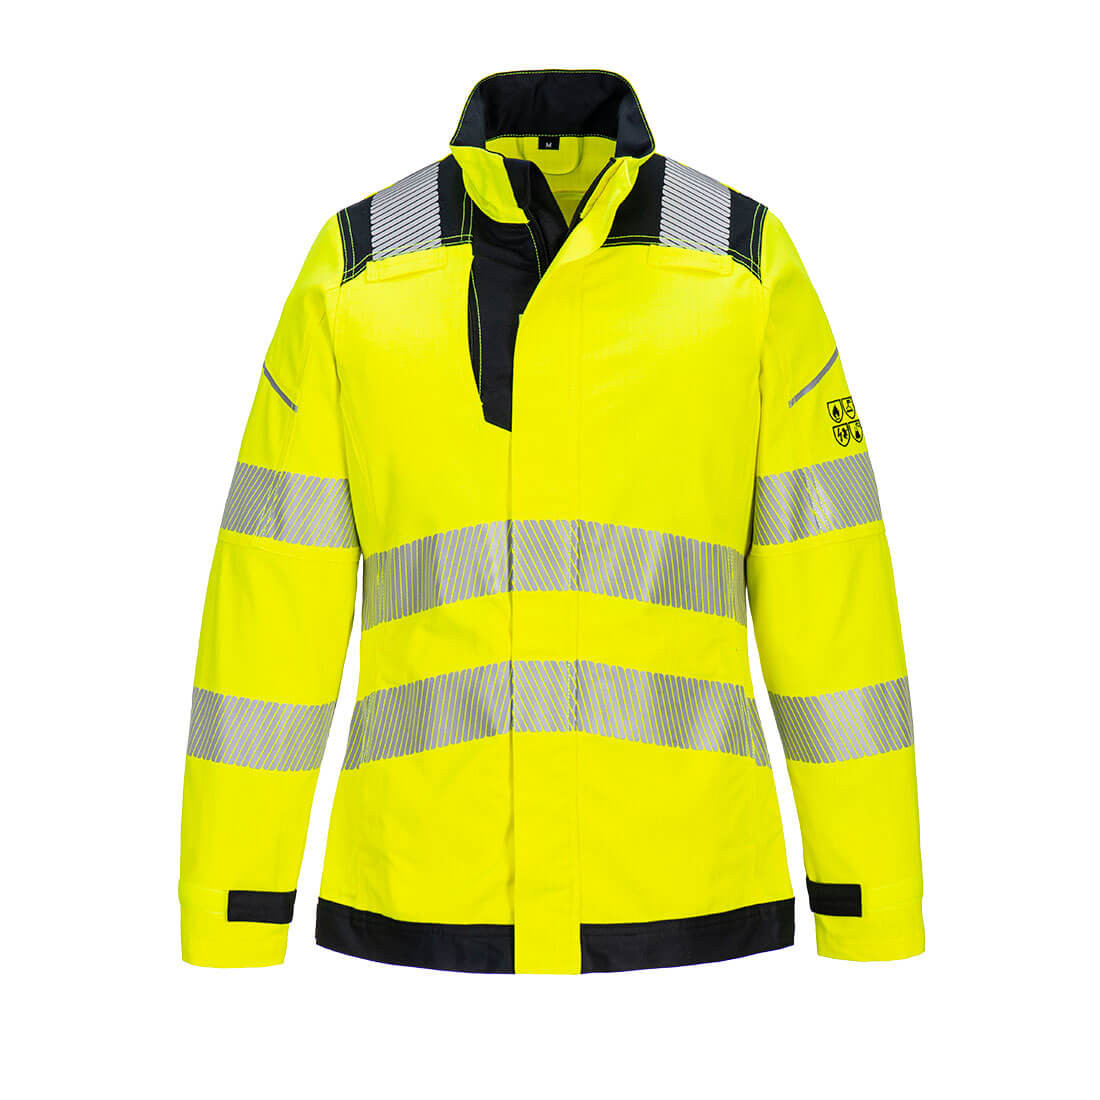 PW3 FR Hi-Vis Women's Work Jacket - Safetywear